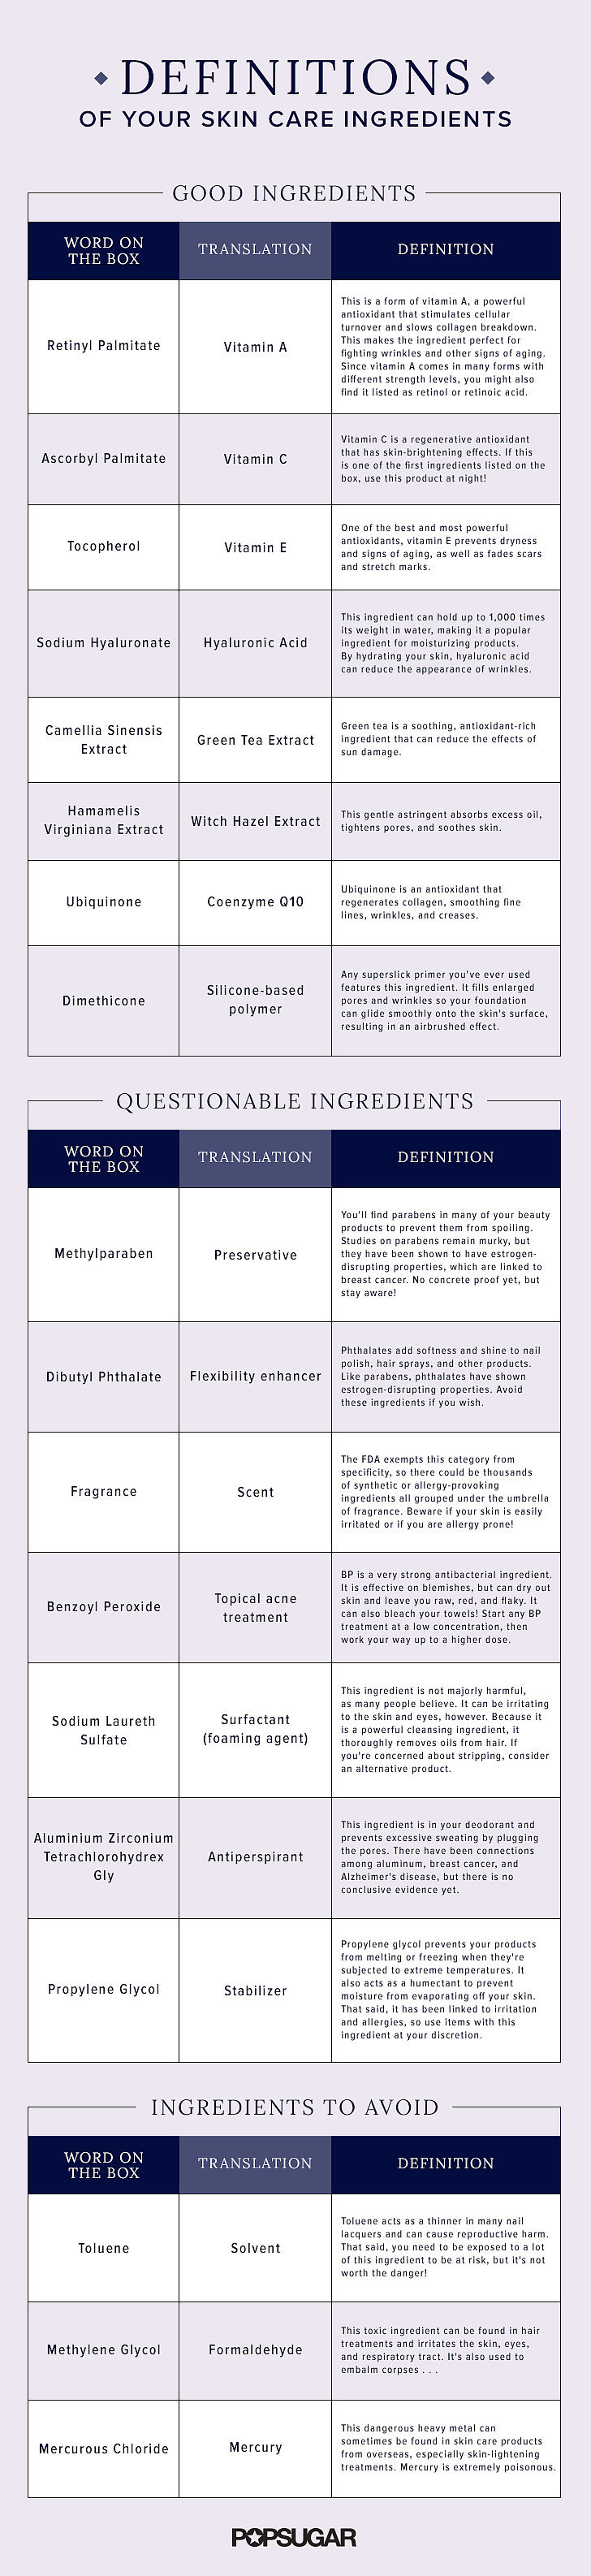 Definitions of Skin Care Ingredients | POPSUGAR Beauty